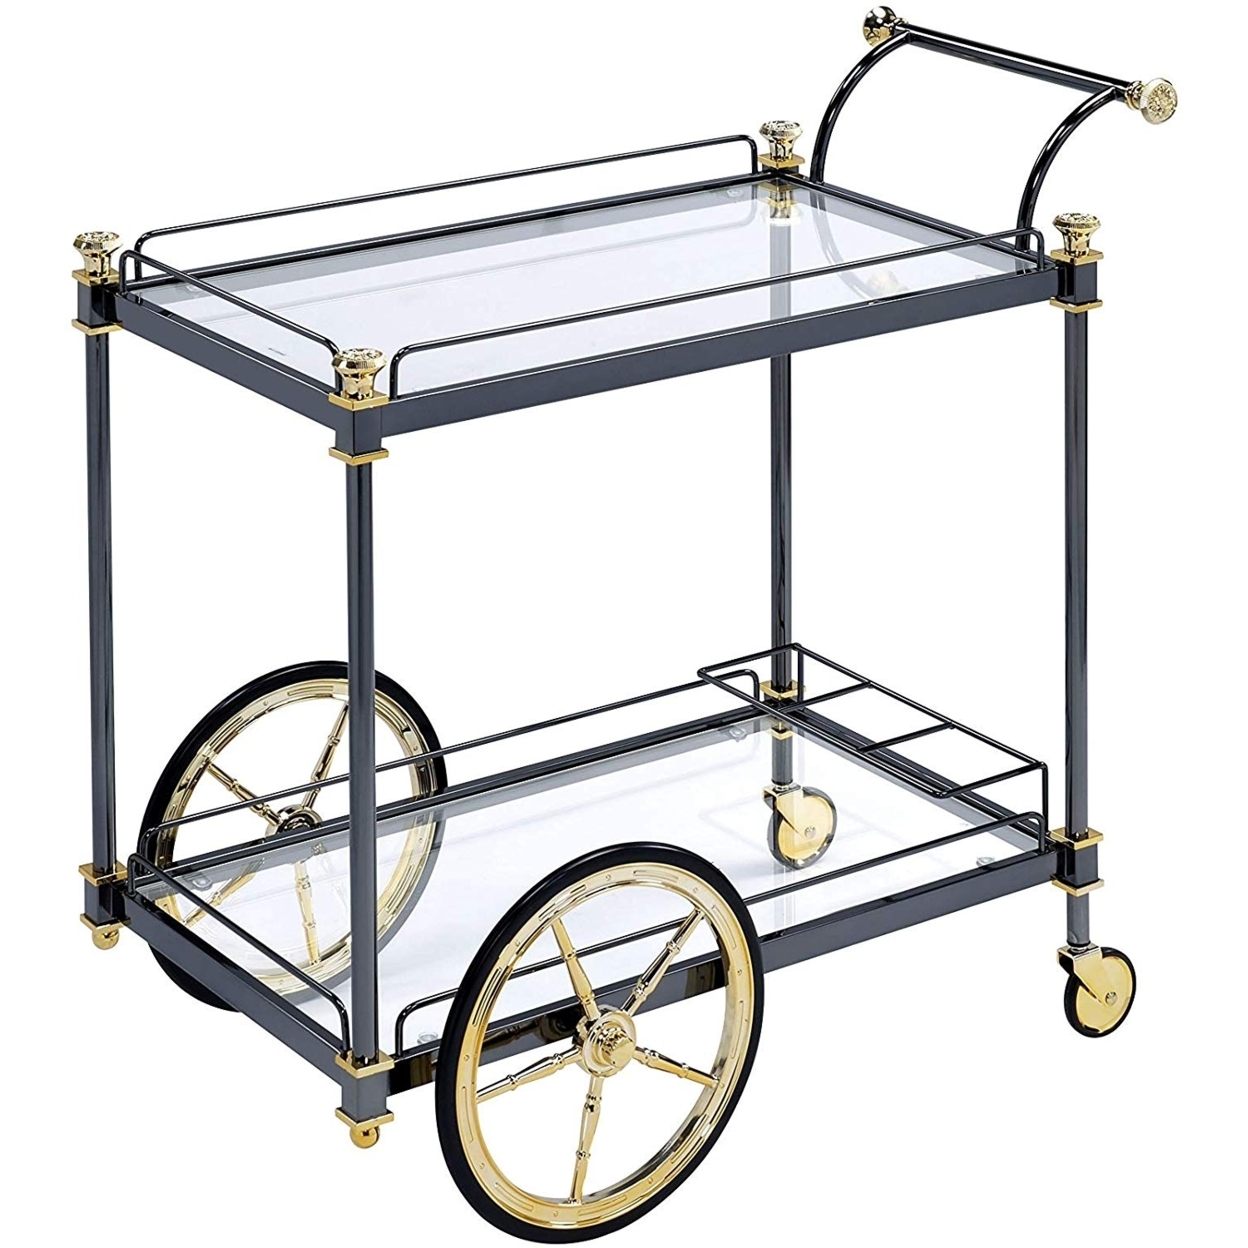 Metal Framed Serving Cart With Glass Shelves And Side Handle, Black And Gold- Saltoro Sherpi